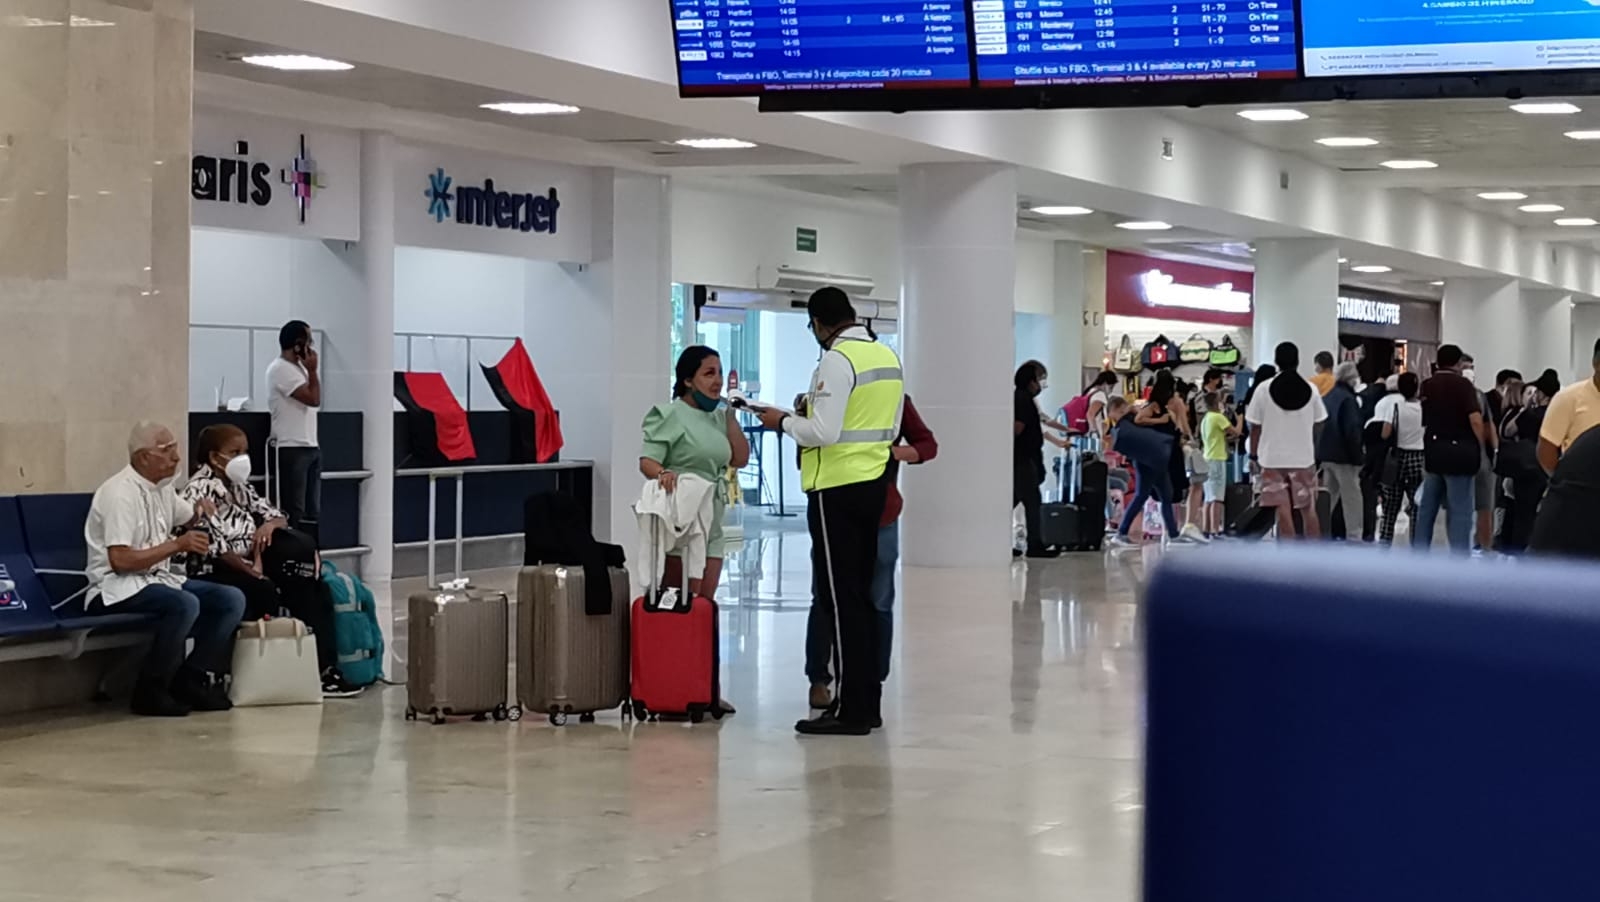 Turista extranjera 'alborota' al aeropuerto de Cancún por robo de su celular: VIDEO